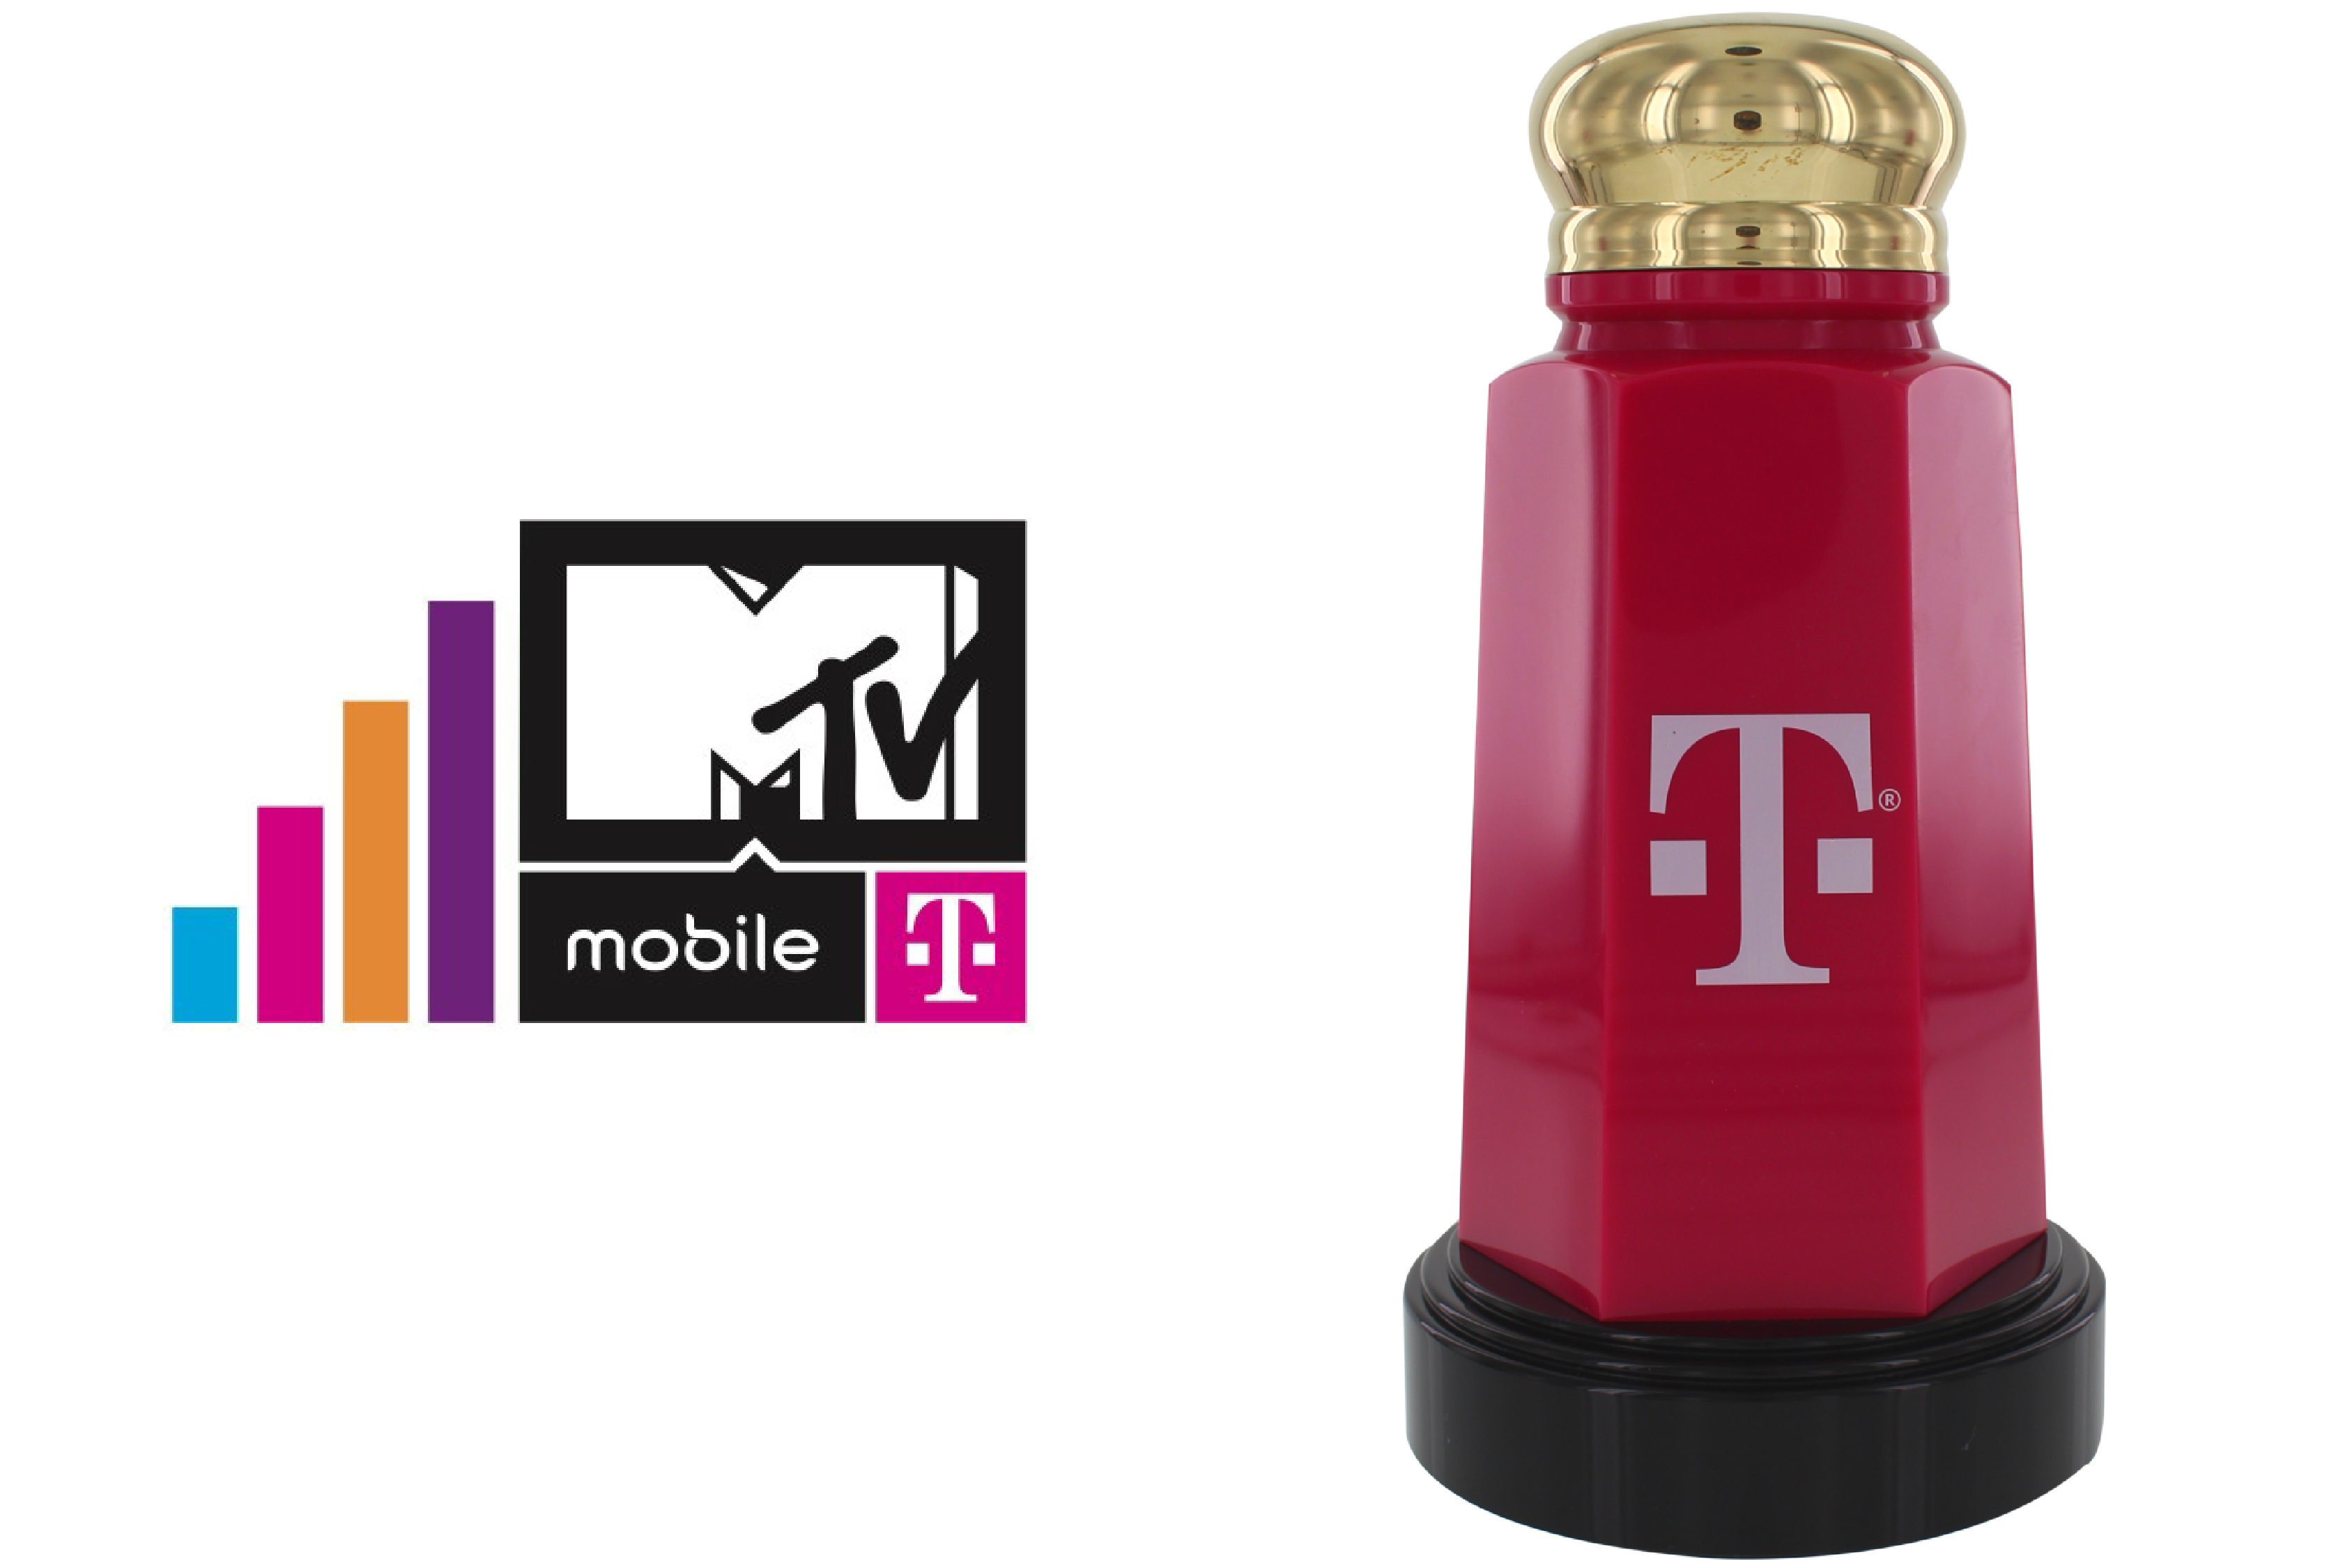 T-Mobile Golden Salt Award for the Best Break-up presented at the MTV Movie Awards